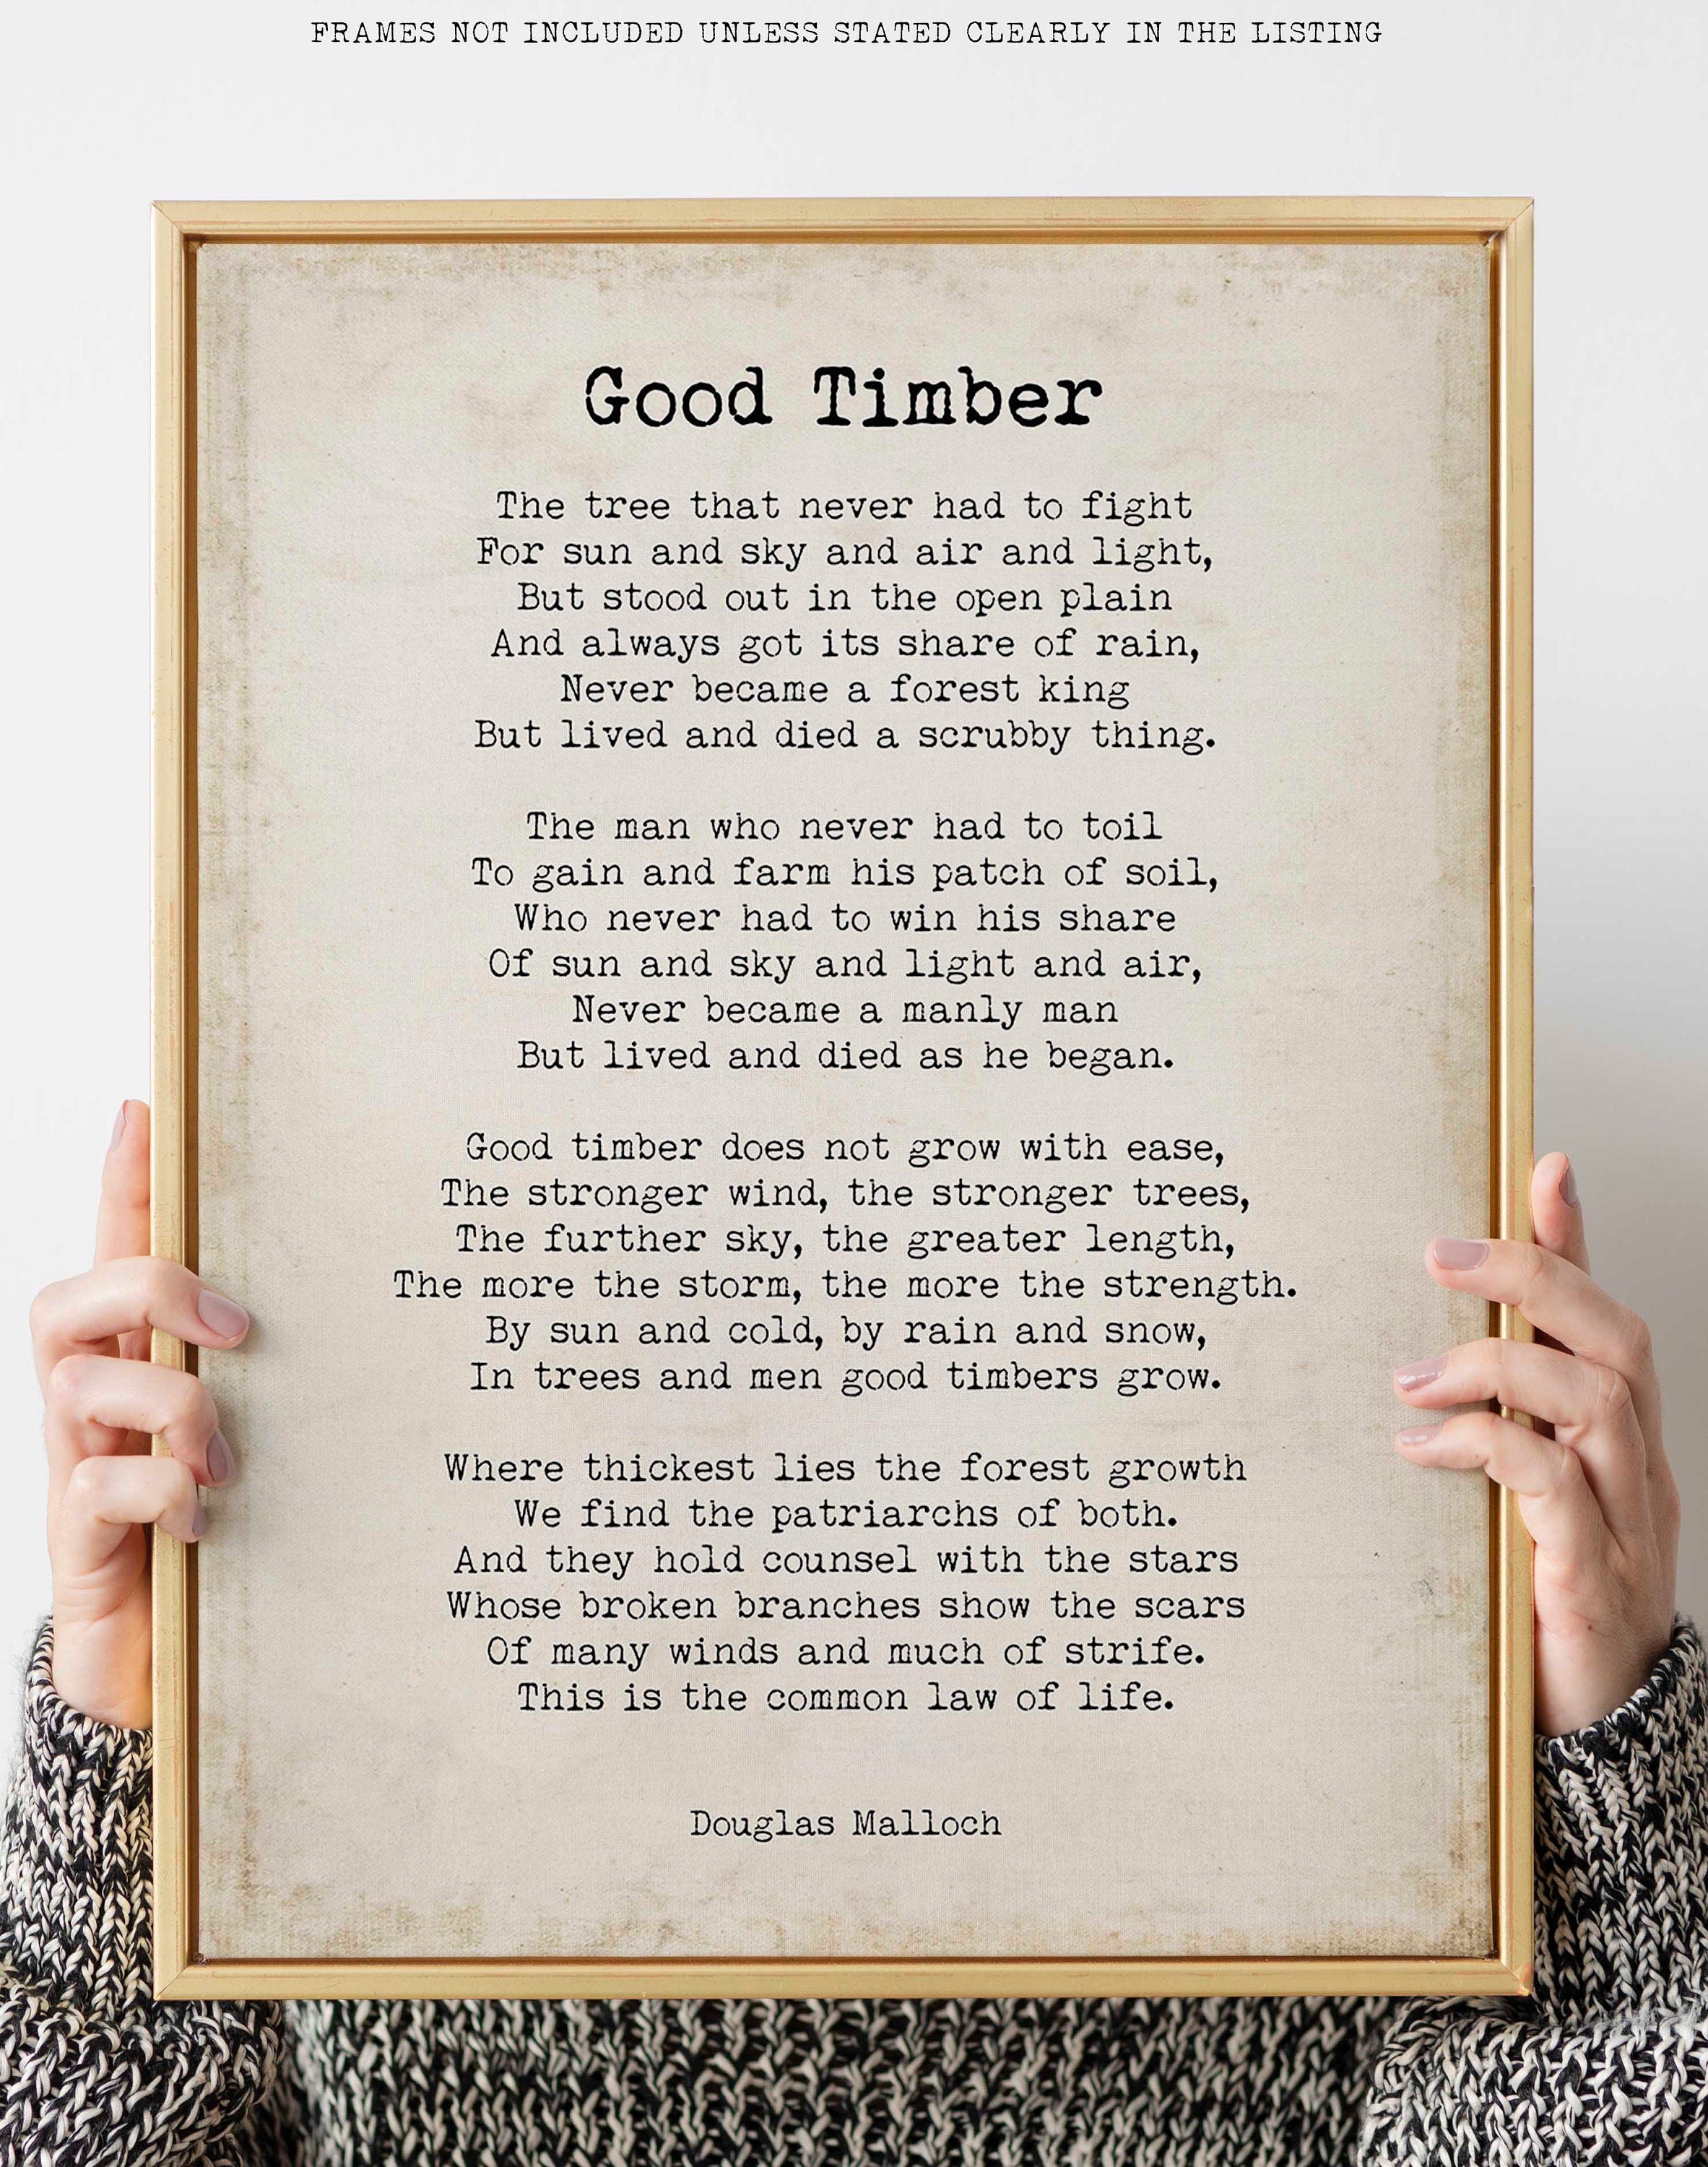 Good Timber Poem LDS, Mormon Gift, Thomas S Monson, Douglas Malloch